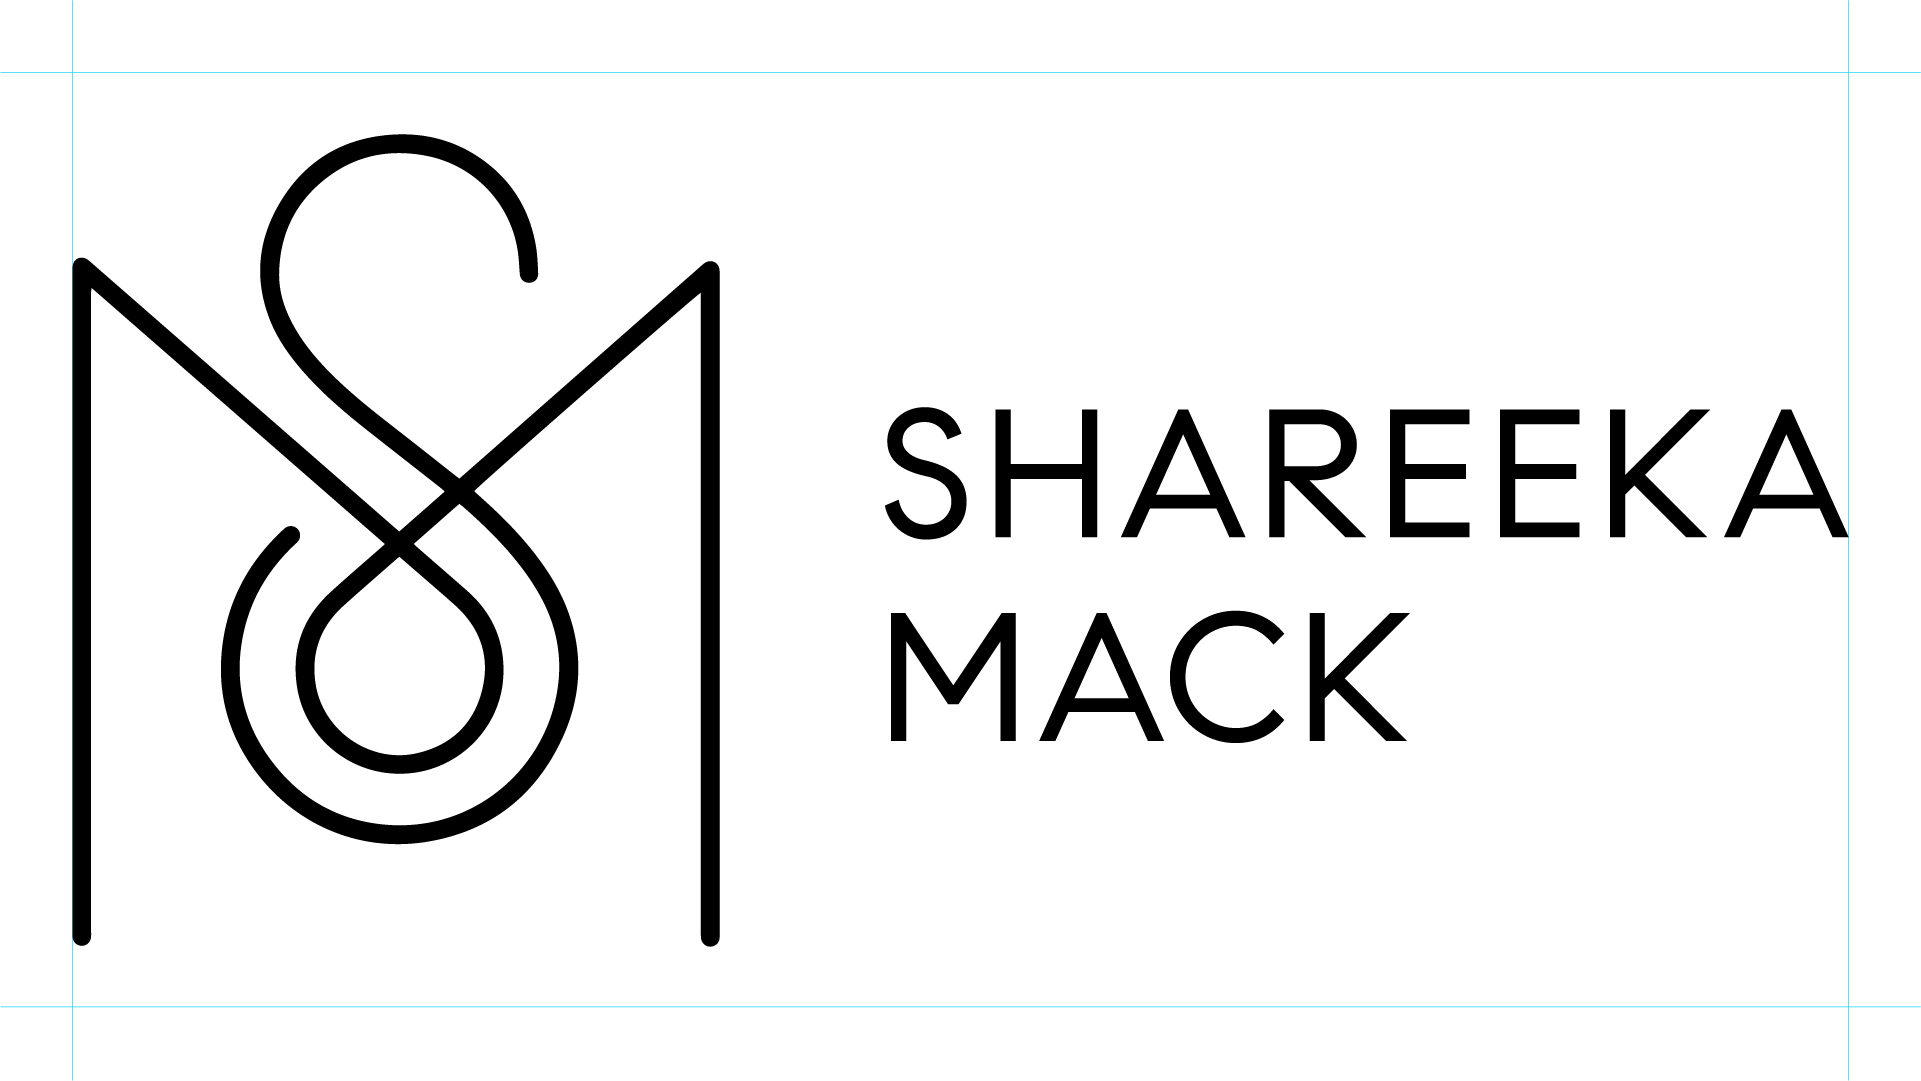 Shareeka-Mack_Monogram+Type_Black_Horizontal